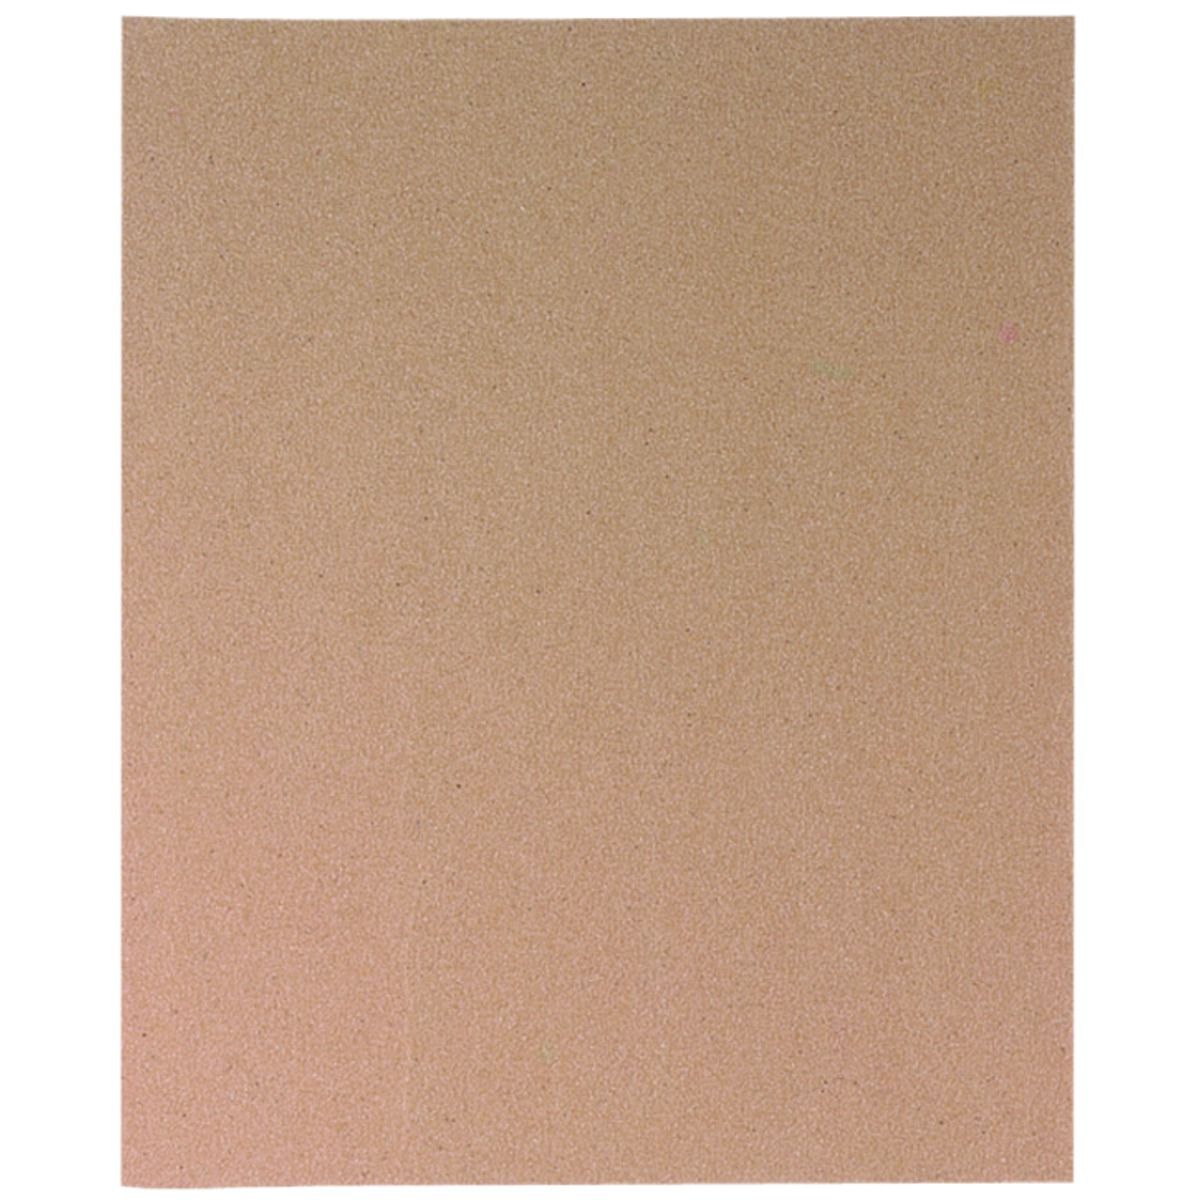 Image of Wickes General Purpose Medium Sandpaper - Pack of 5